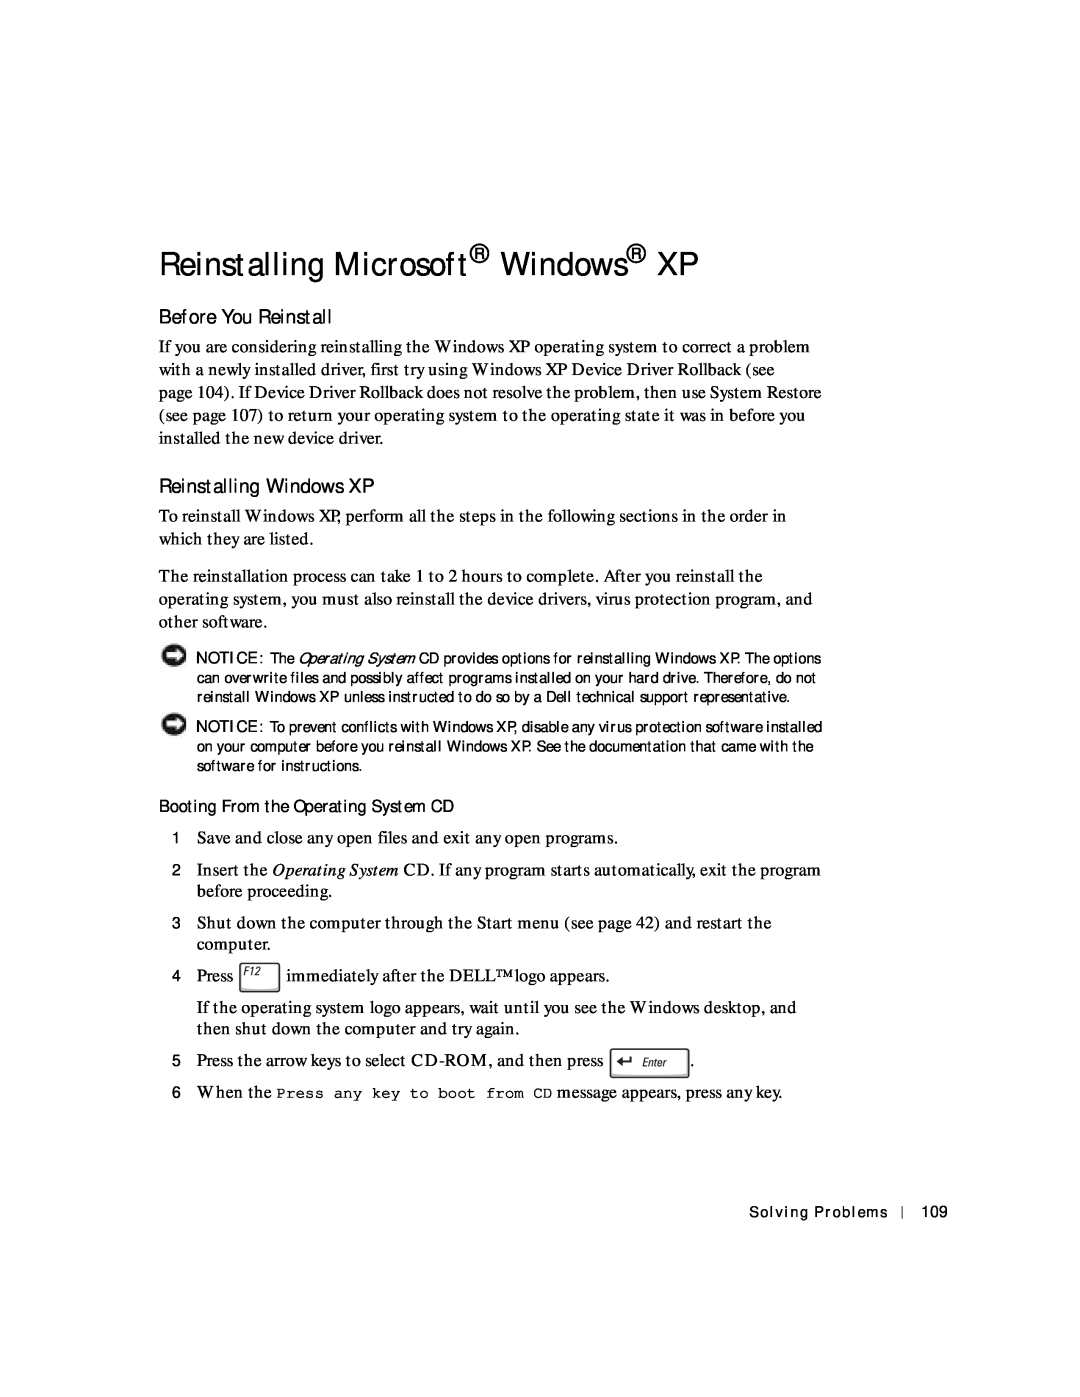 Dell 8600 manual Reinstalling Microsoft Windows XP, Before You Reinstall, Reinstalling Windows XP 